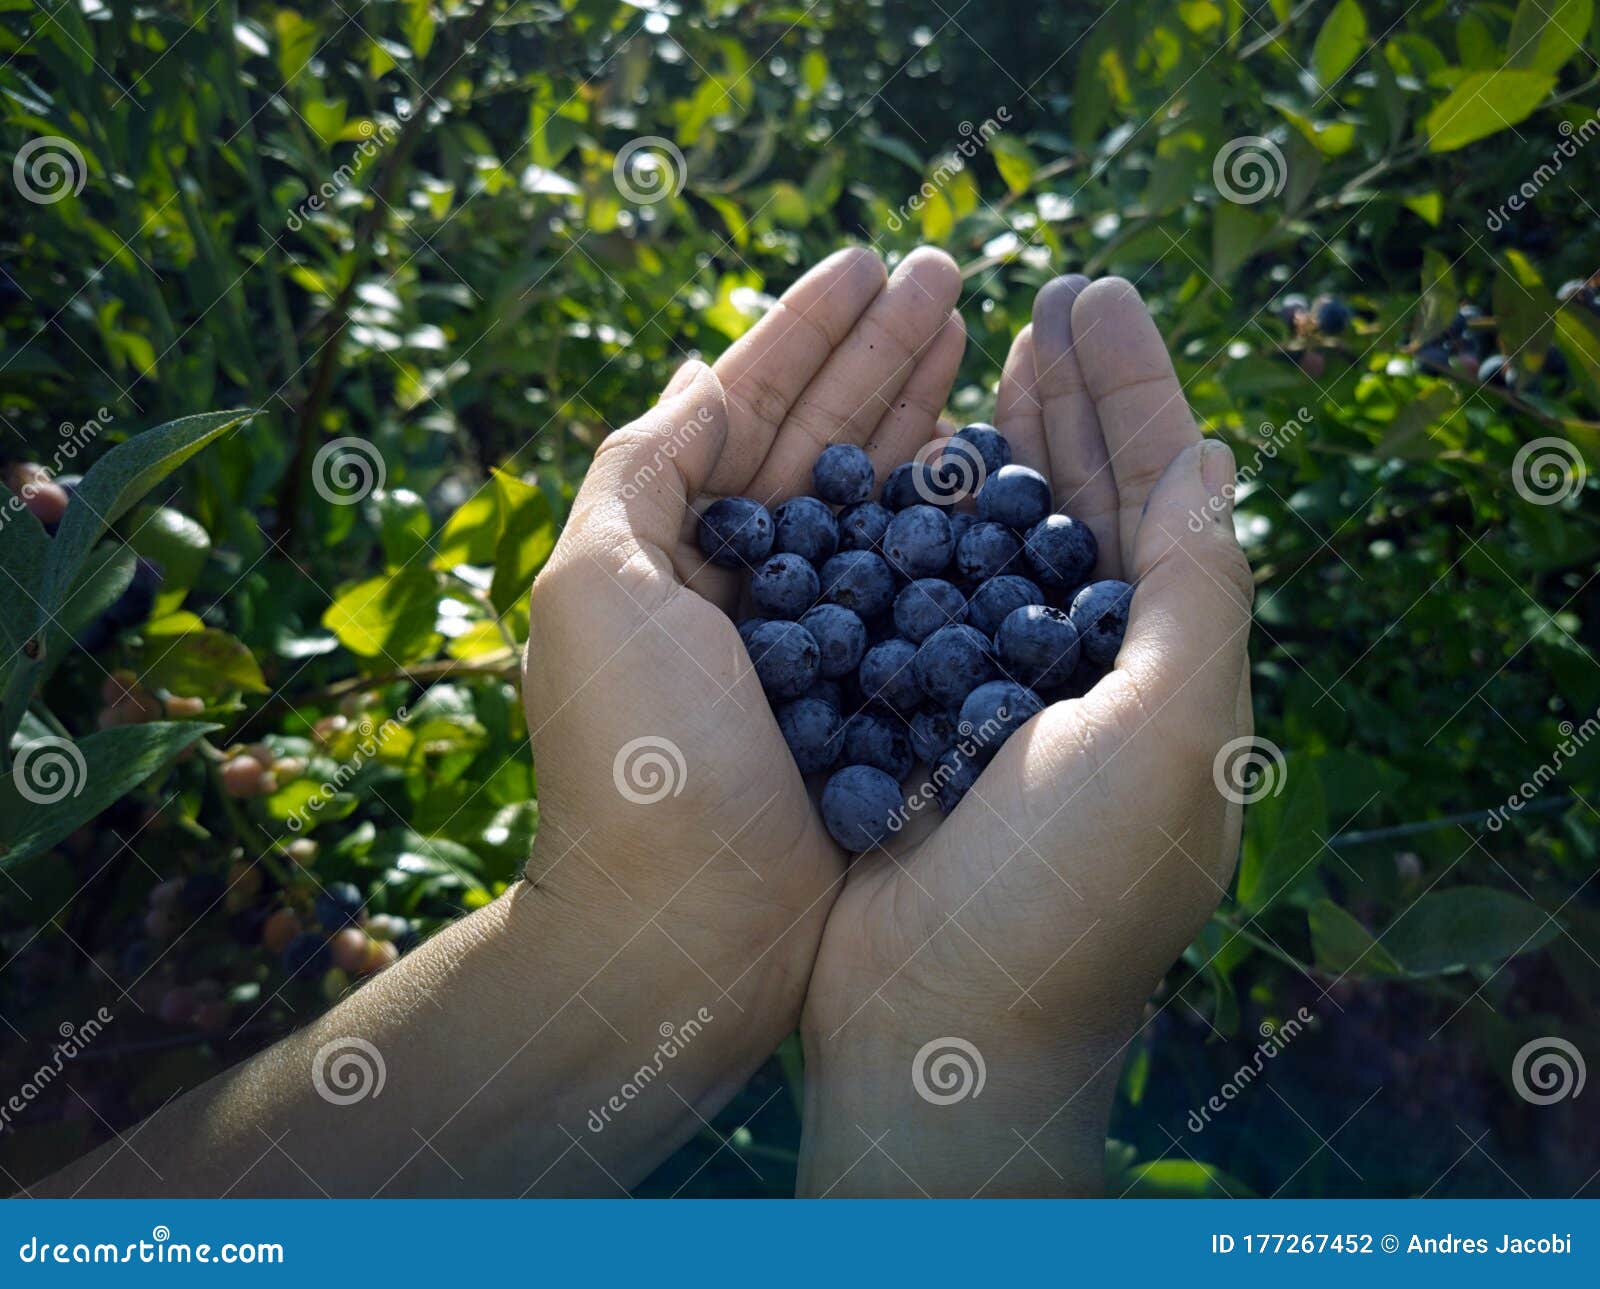 woman hands full of freshly picked blueberries